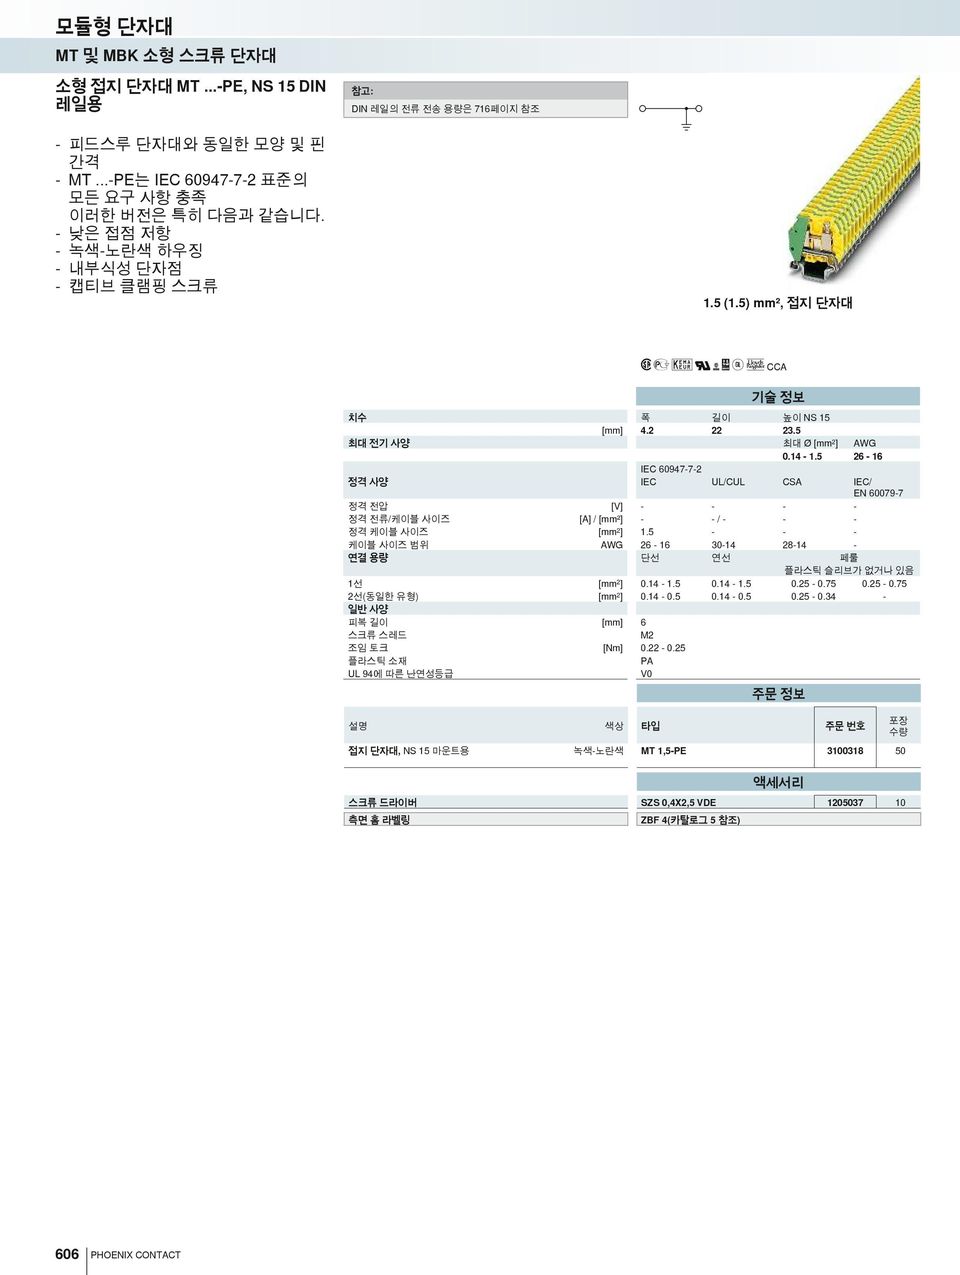 5 26-16 IEC 60947-7-2 정격 사양 IEC UL/CUL CSA IEC/ 정격 전압 [V] - - - - 정격 전류/케이블 사이즈 [A] / [mm²] - - / - - - 정격 케이블 사이즈 [mm 2 ] 1.